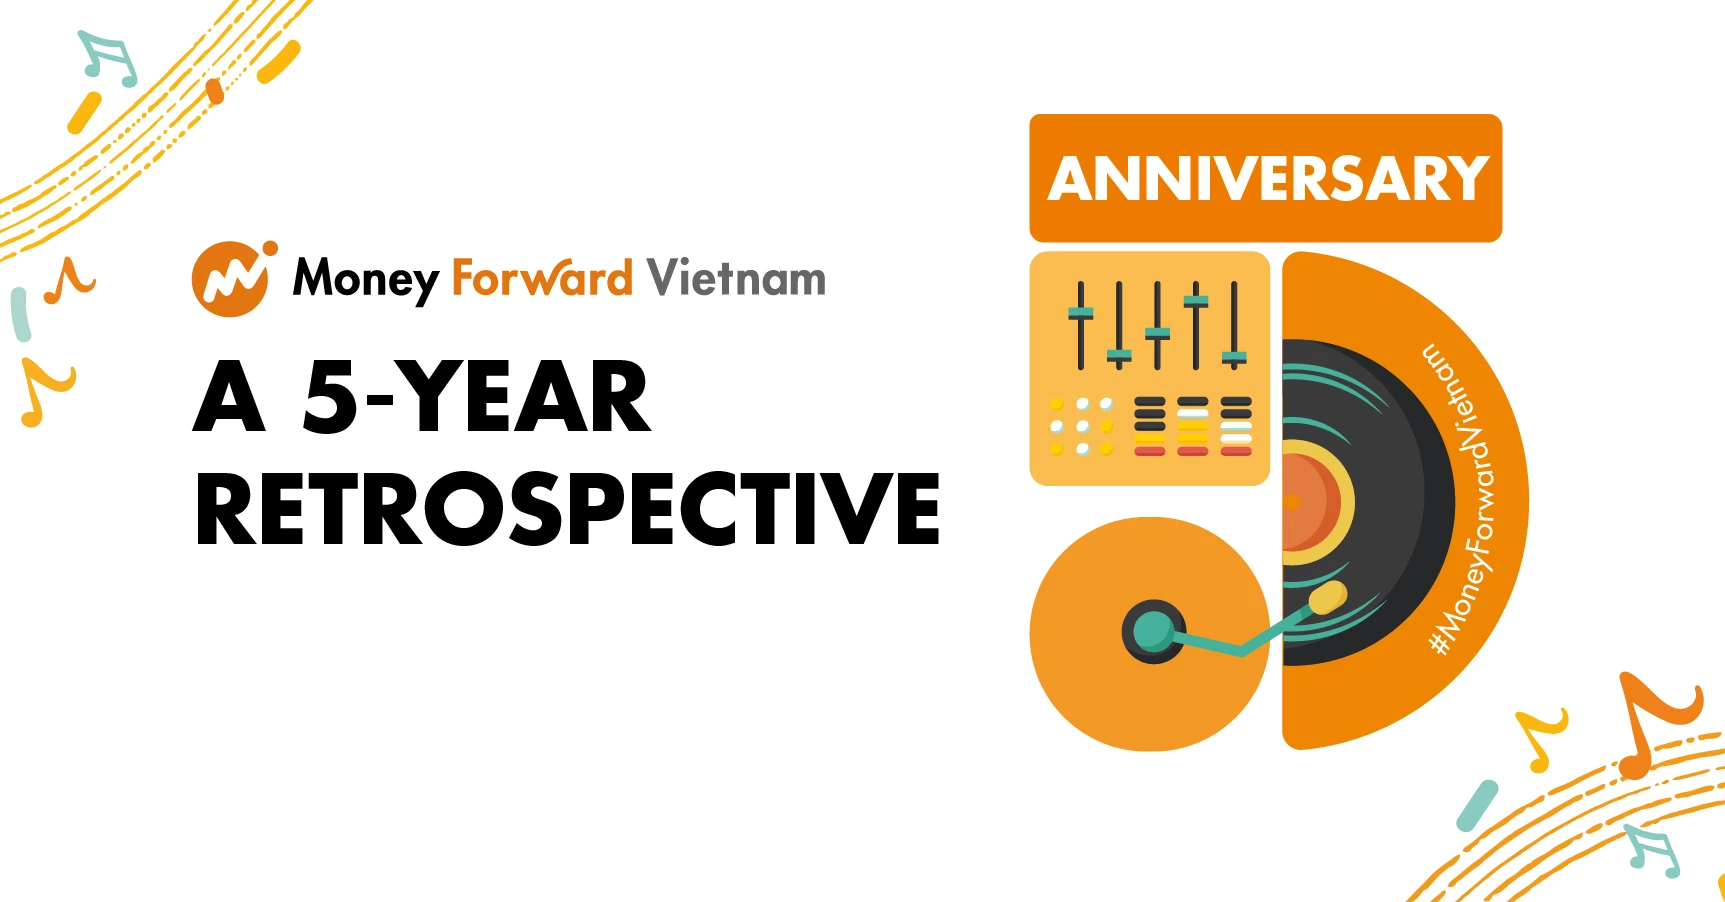 Money Forward Vietnam - A 5-Year Retrospective